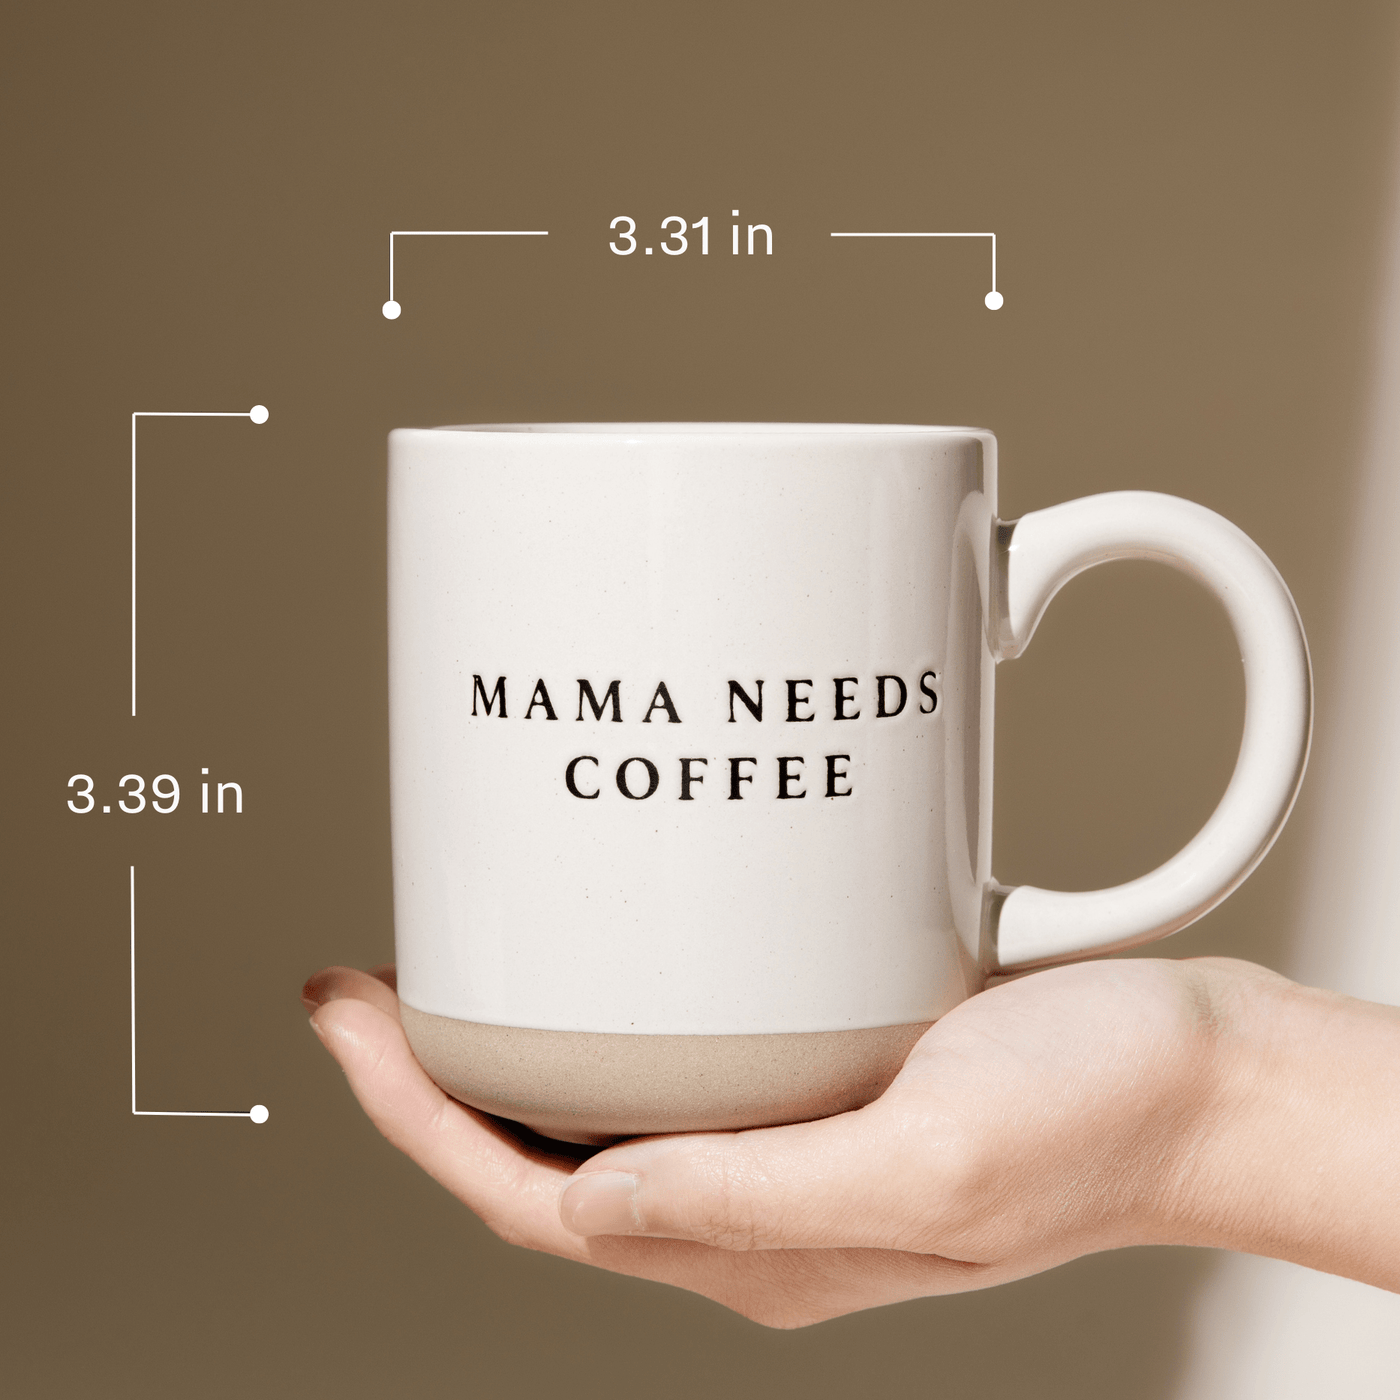 Warm and Cozy 14oz. Stoneware Coffee Mug - Sweet Water Decor - Coffee Mugs